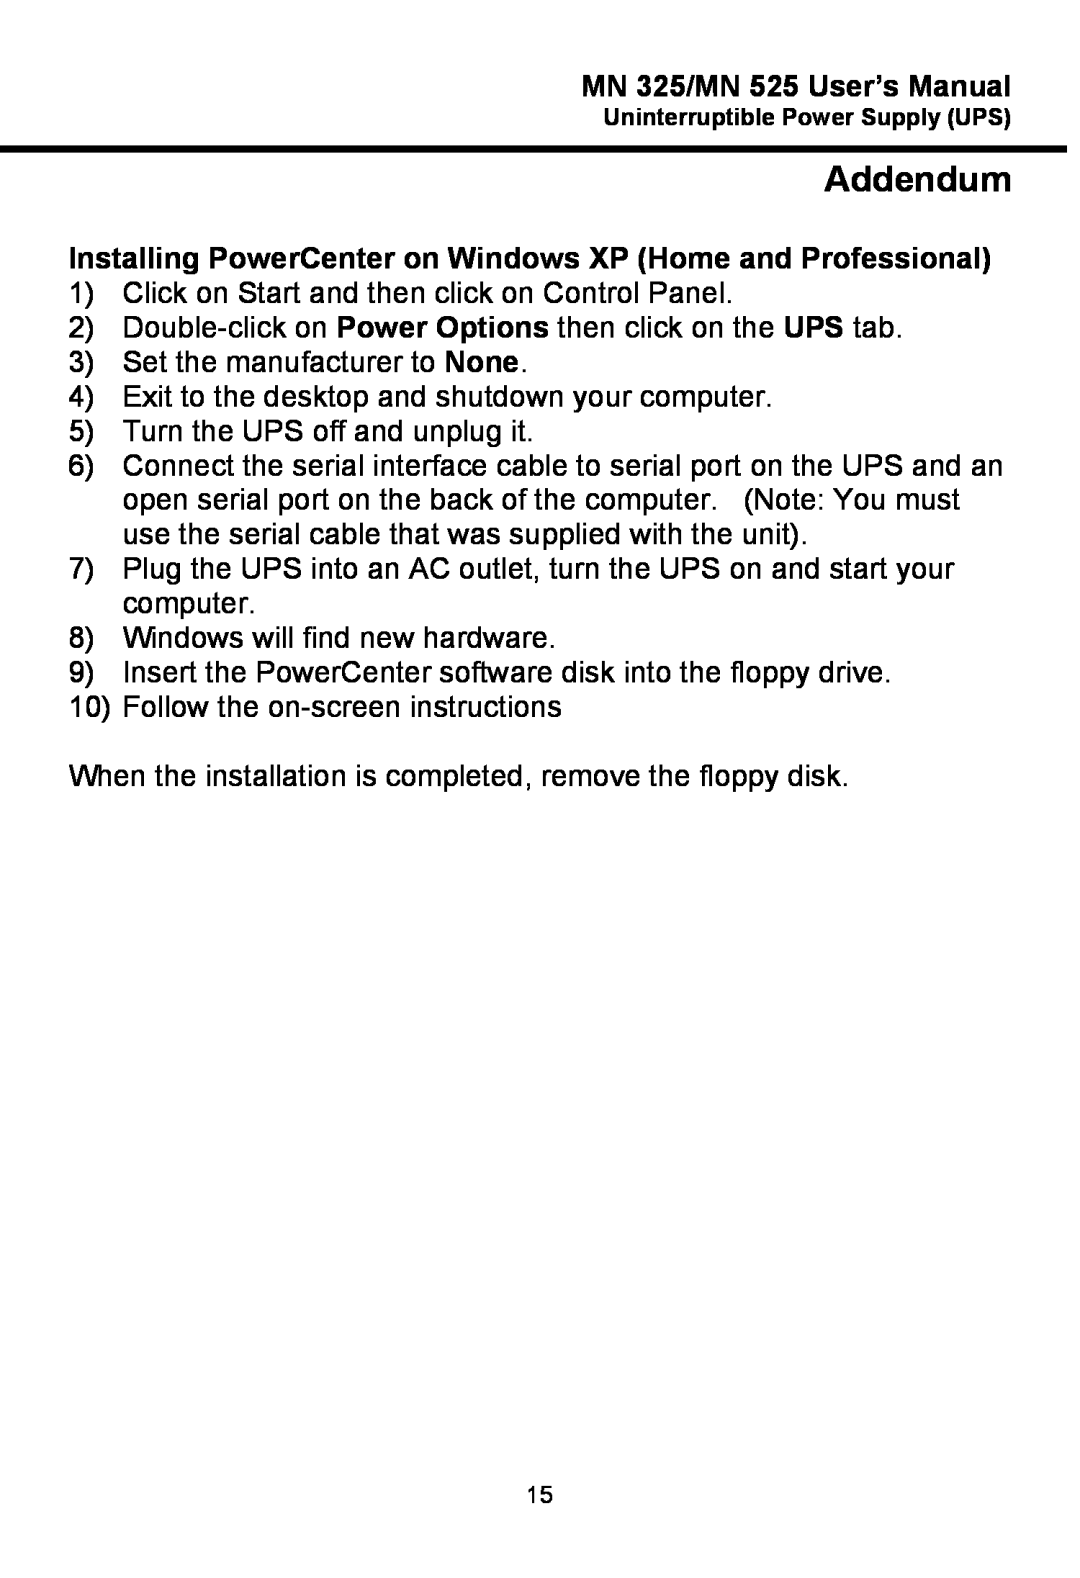 Minuteman UPS Installing PowerCenter on Windows XP Home and Professional, Addendum, MN 325/MN 525 User’s Manual 